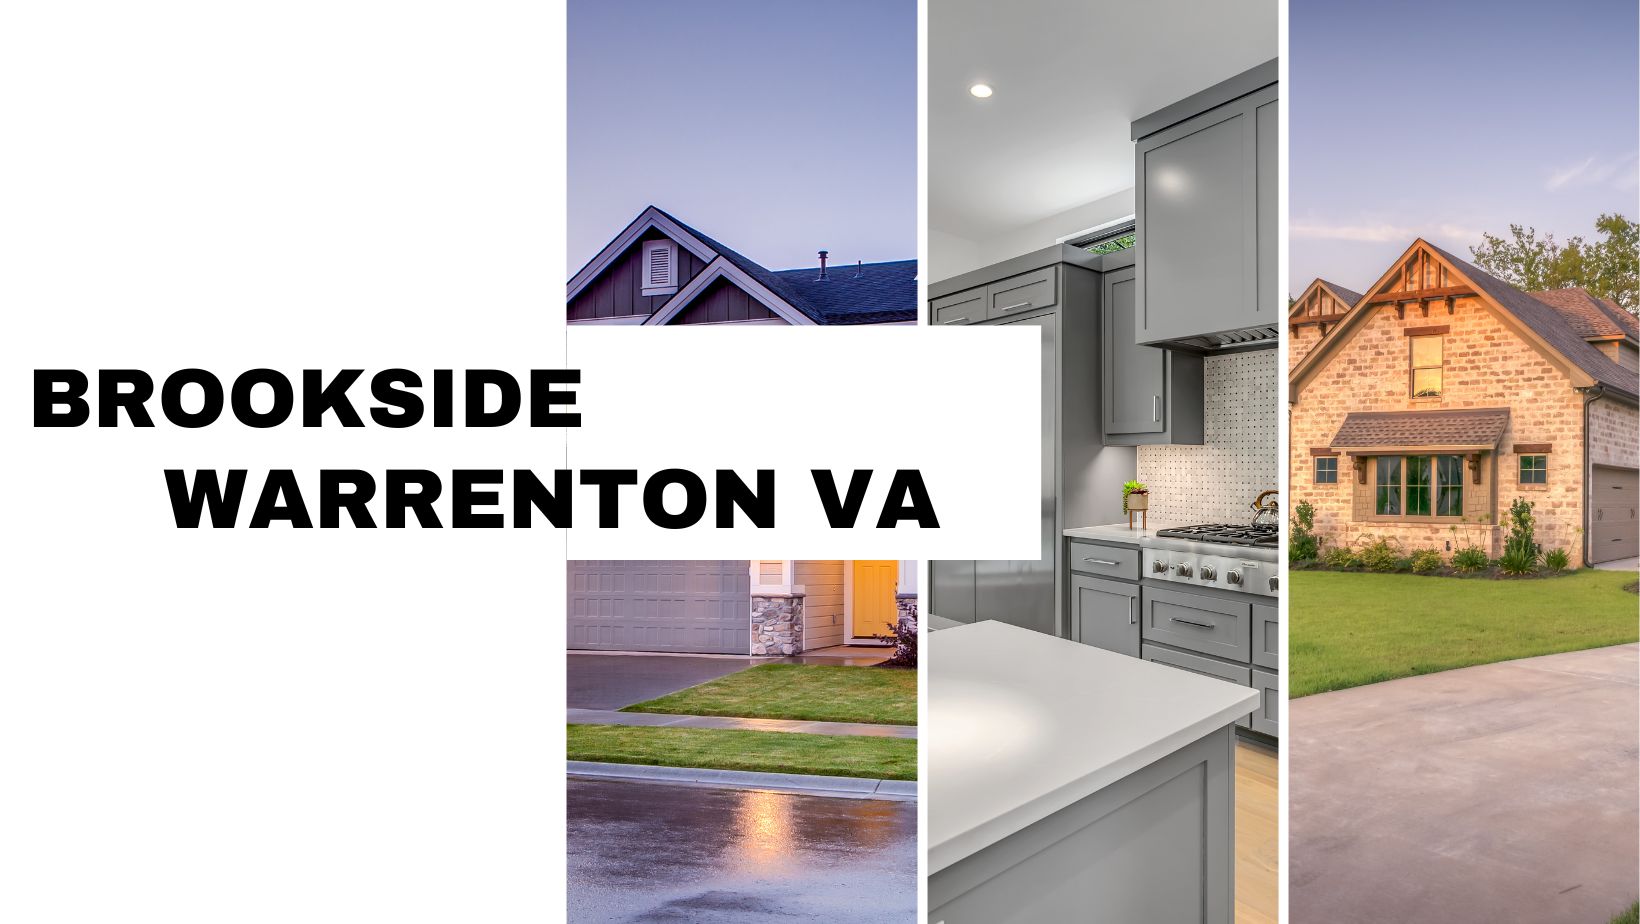 Brookside Warrenton VA Homes for Sale